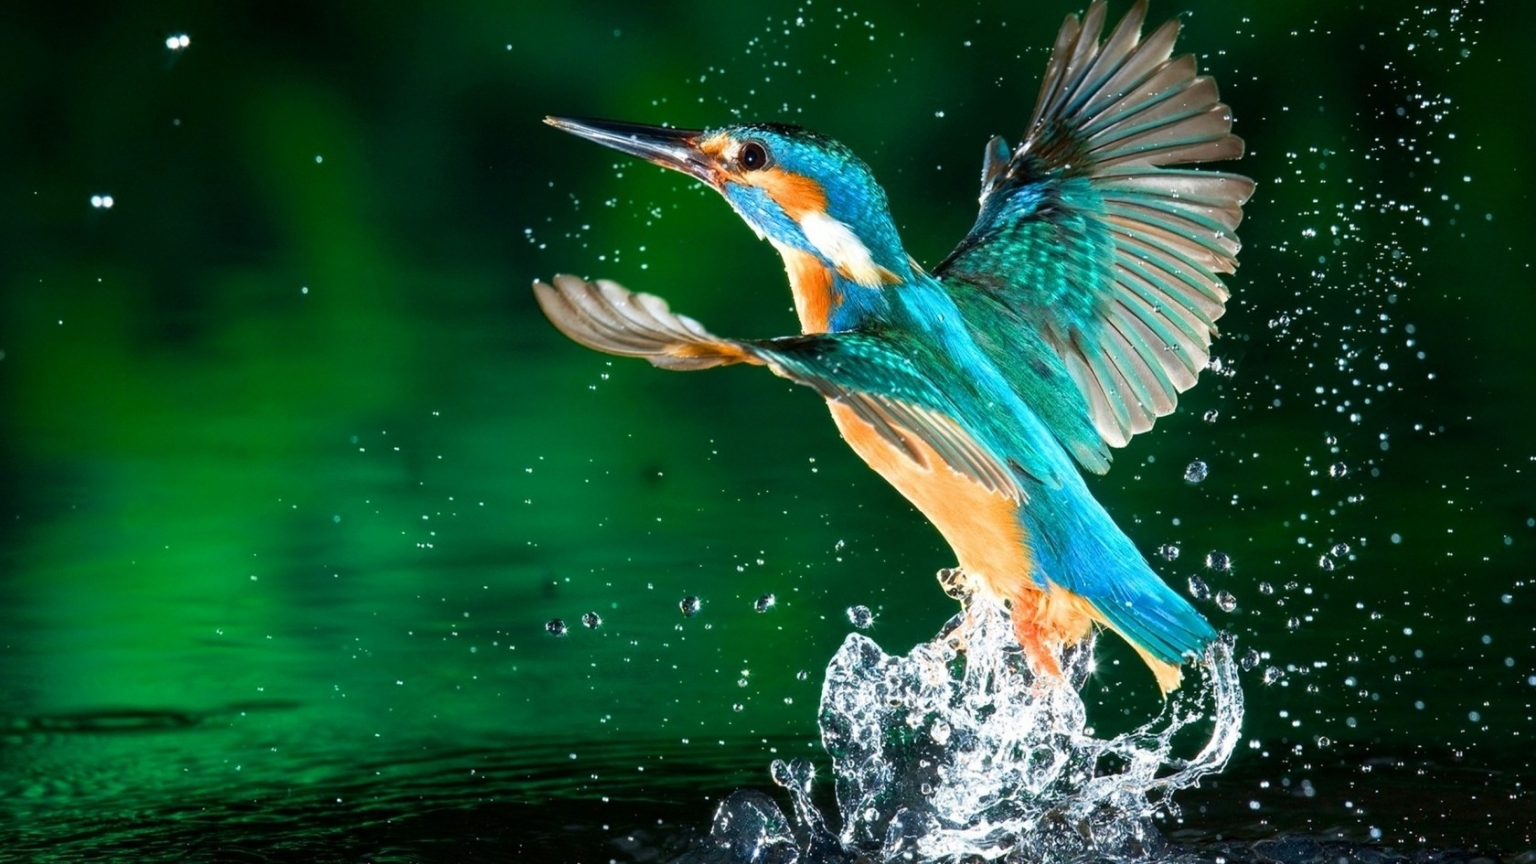 Kingfisher Bird for 1536 x 864 HDTV resolution